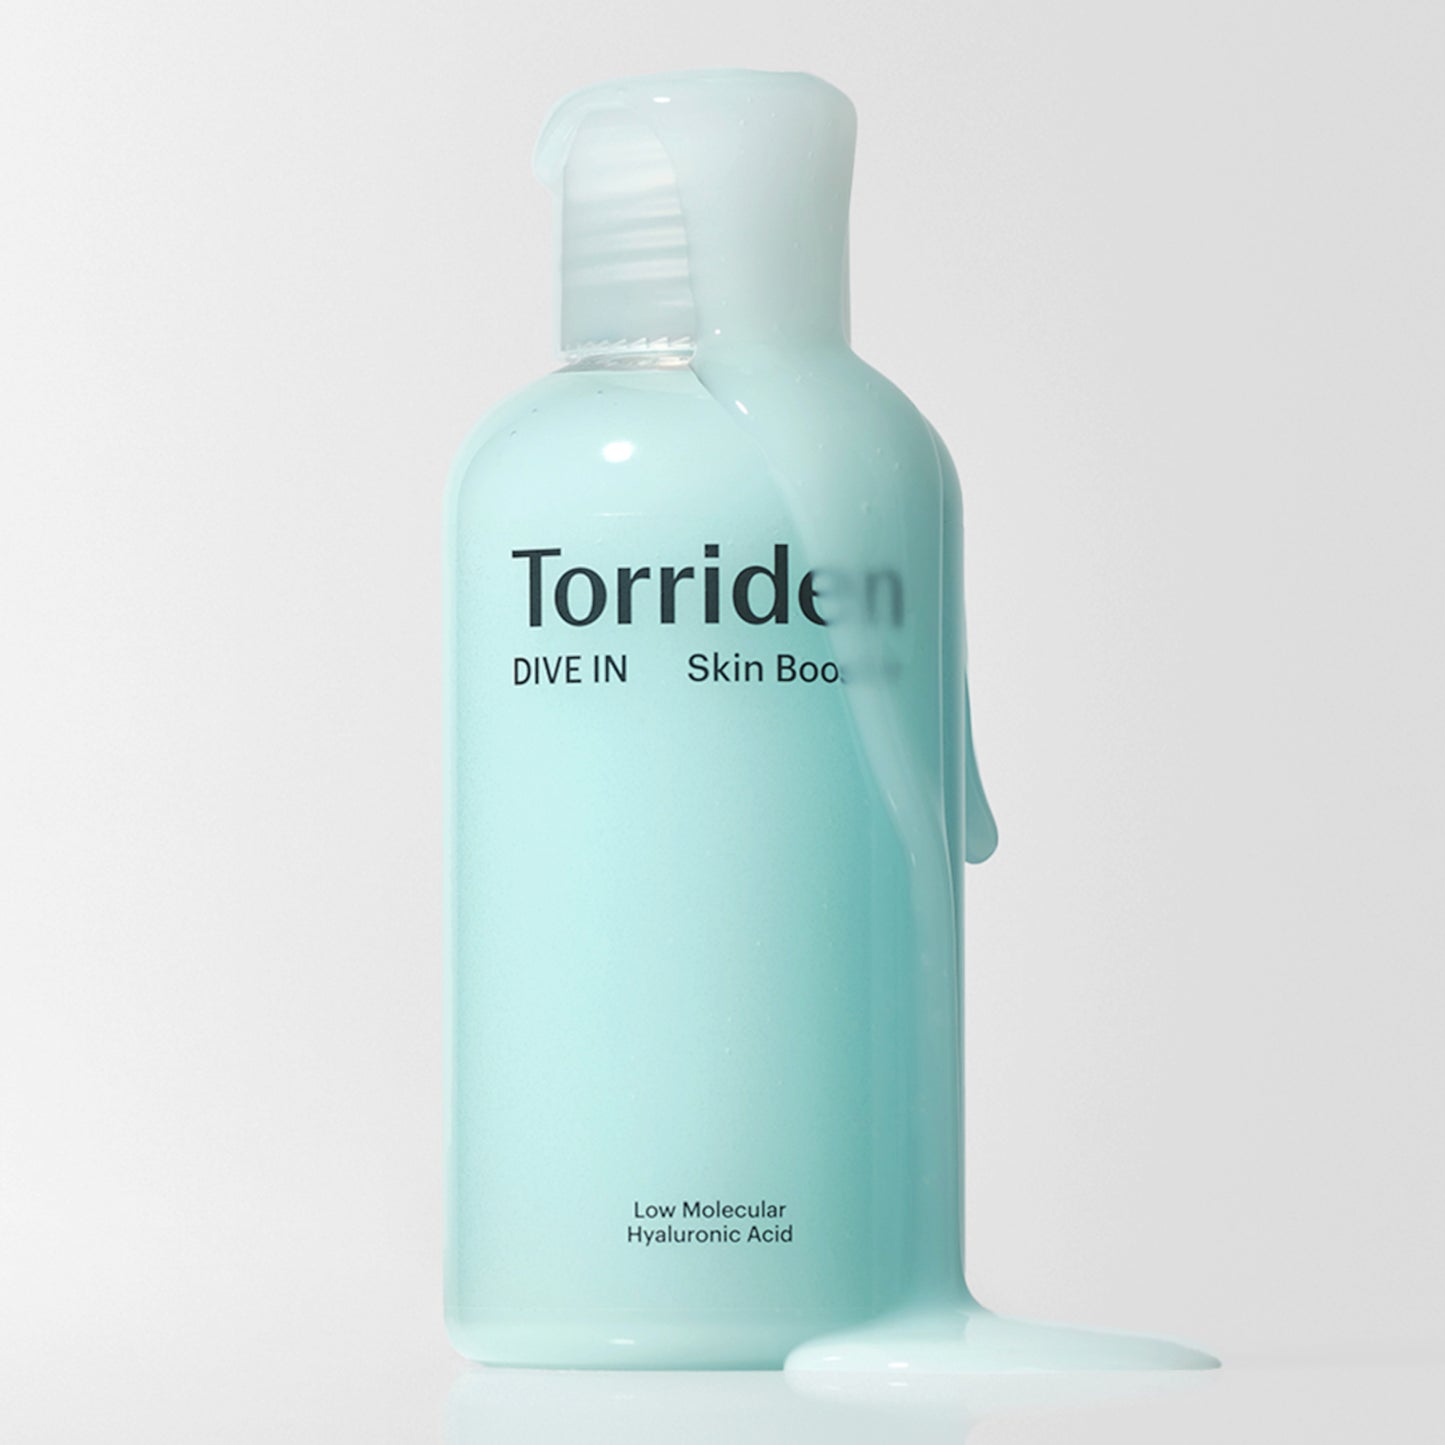 TORRIDEN DIVE-IN Low Molecular Hyaluronic Acid Skin Booster (200ml)